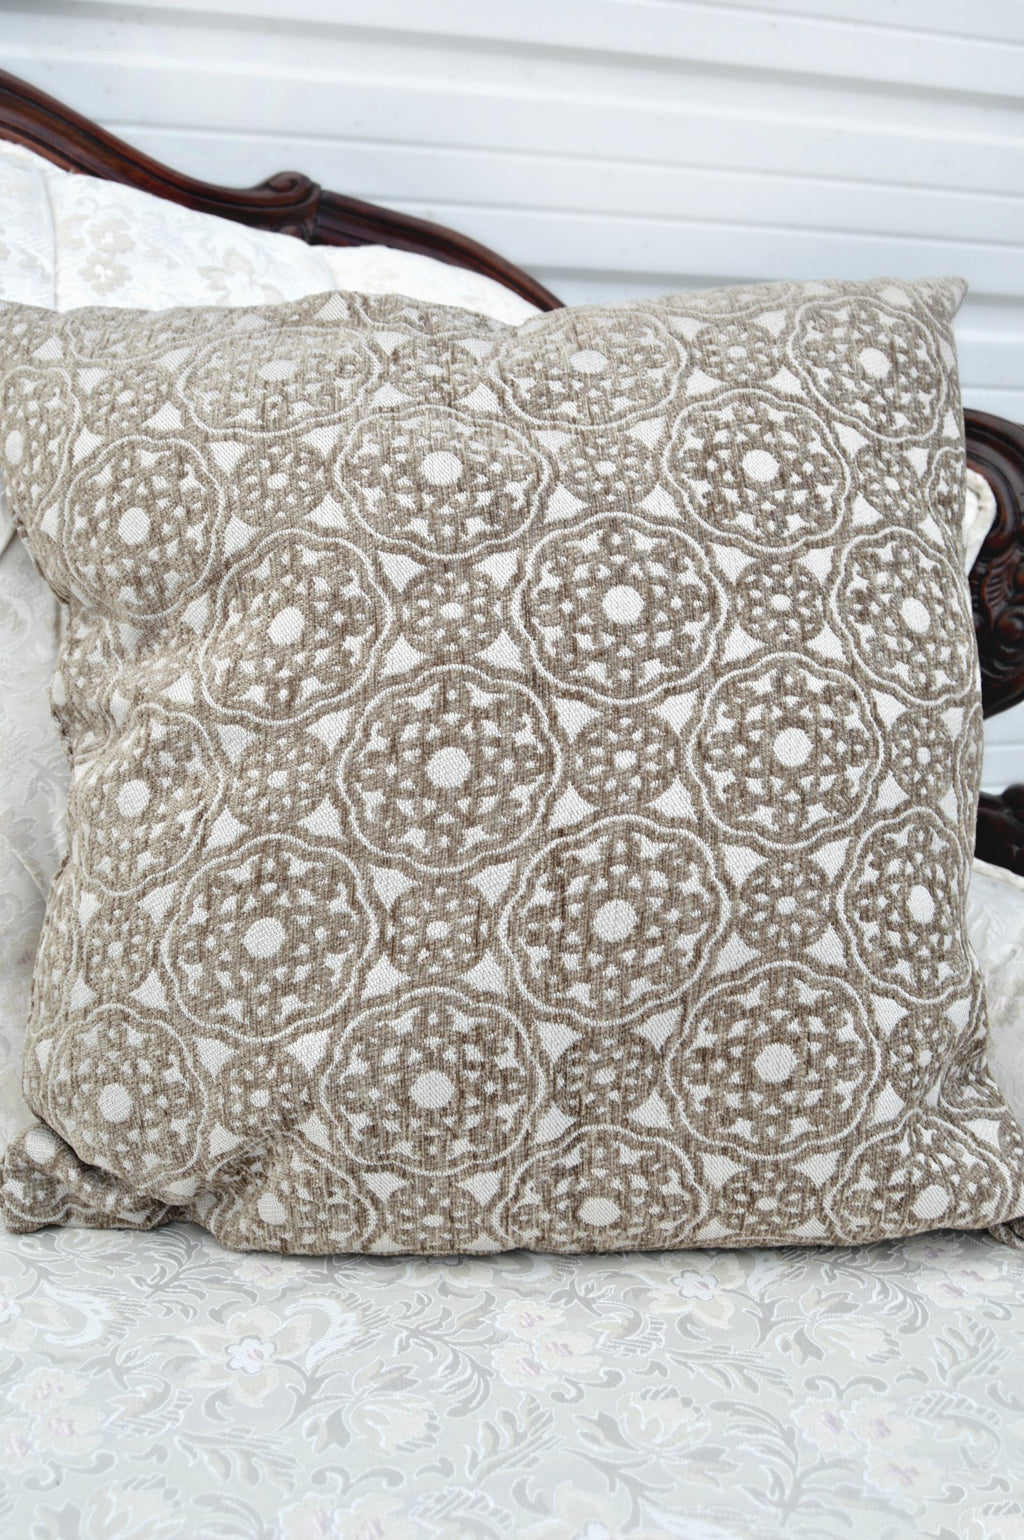 Tan kaleidoscope patterned pillow